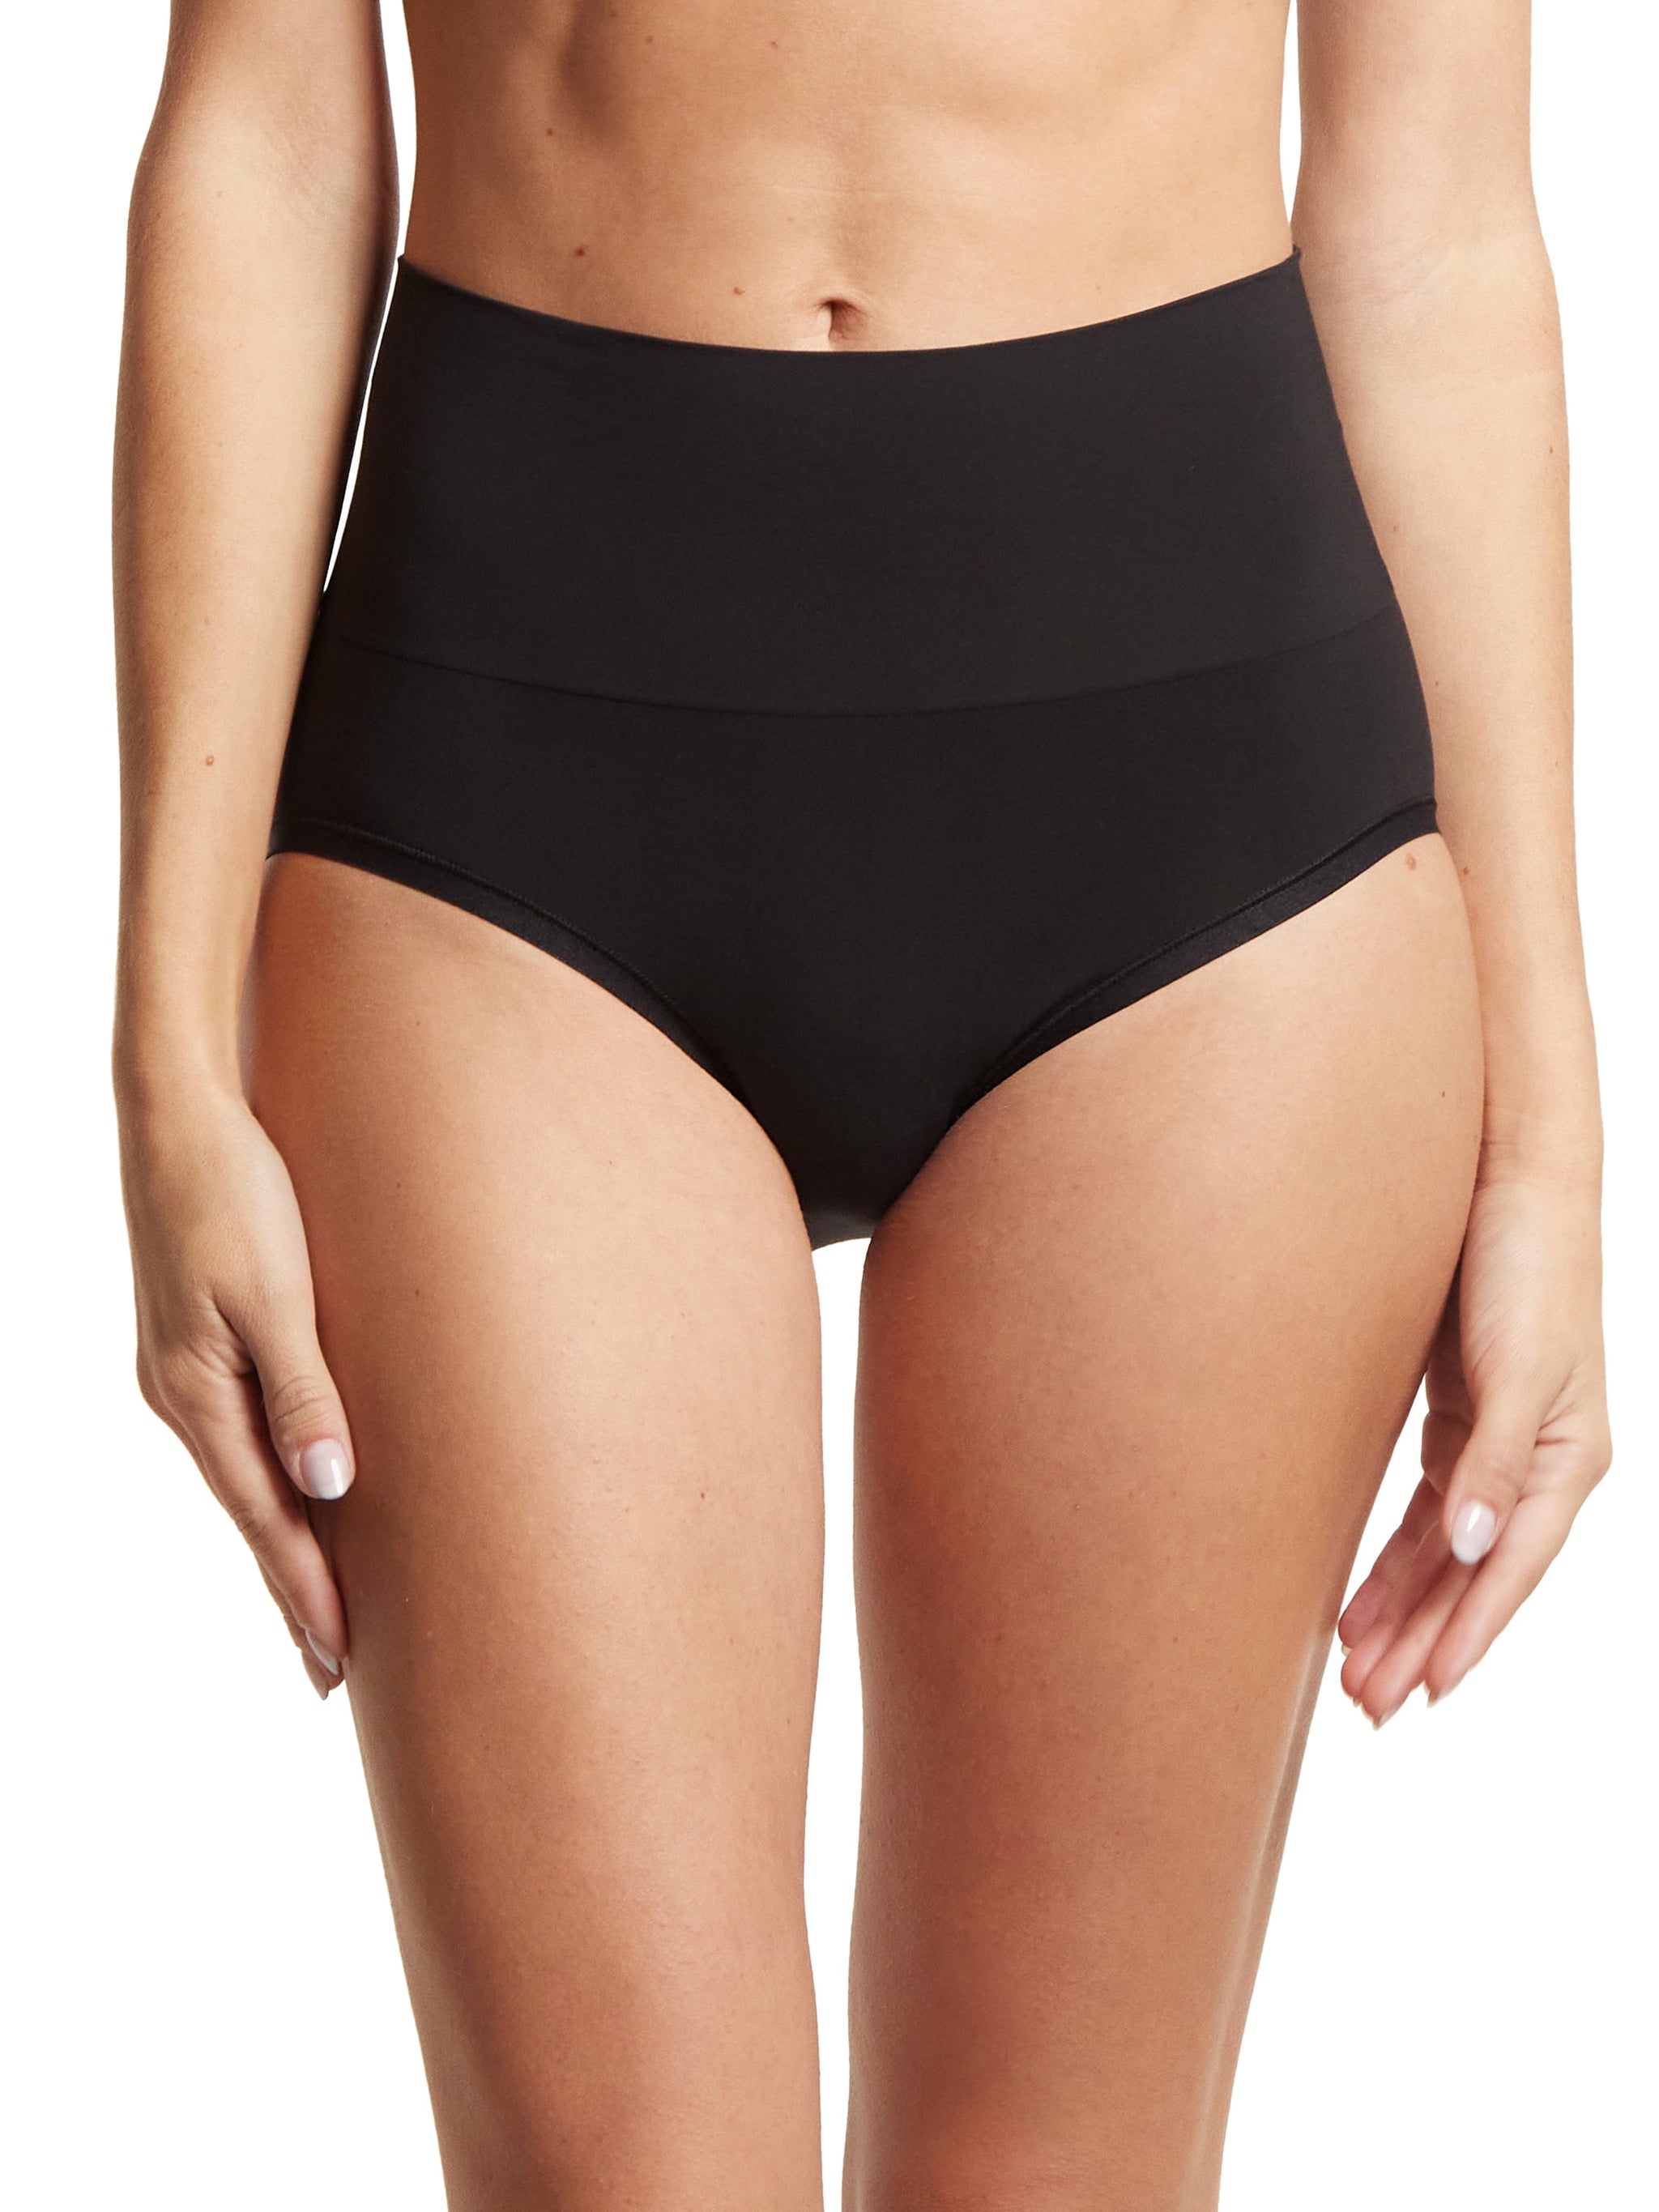 QWERTYU Underwear Seamless High Waisted Lace Womens Tummy Control